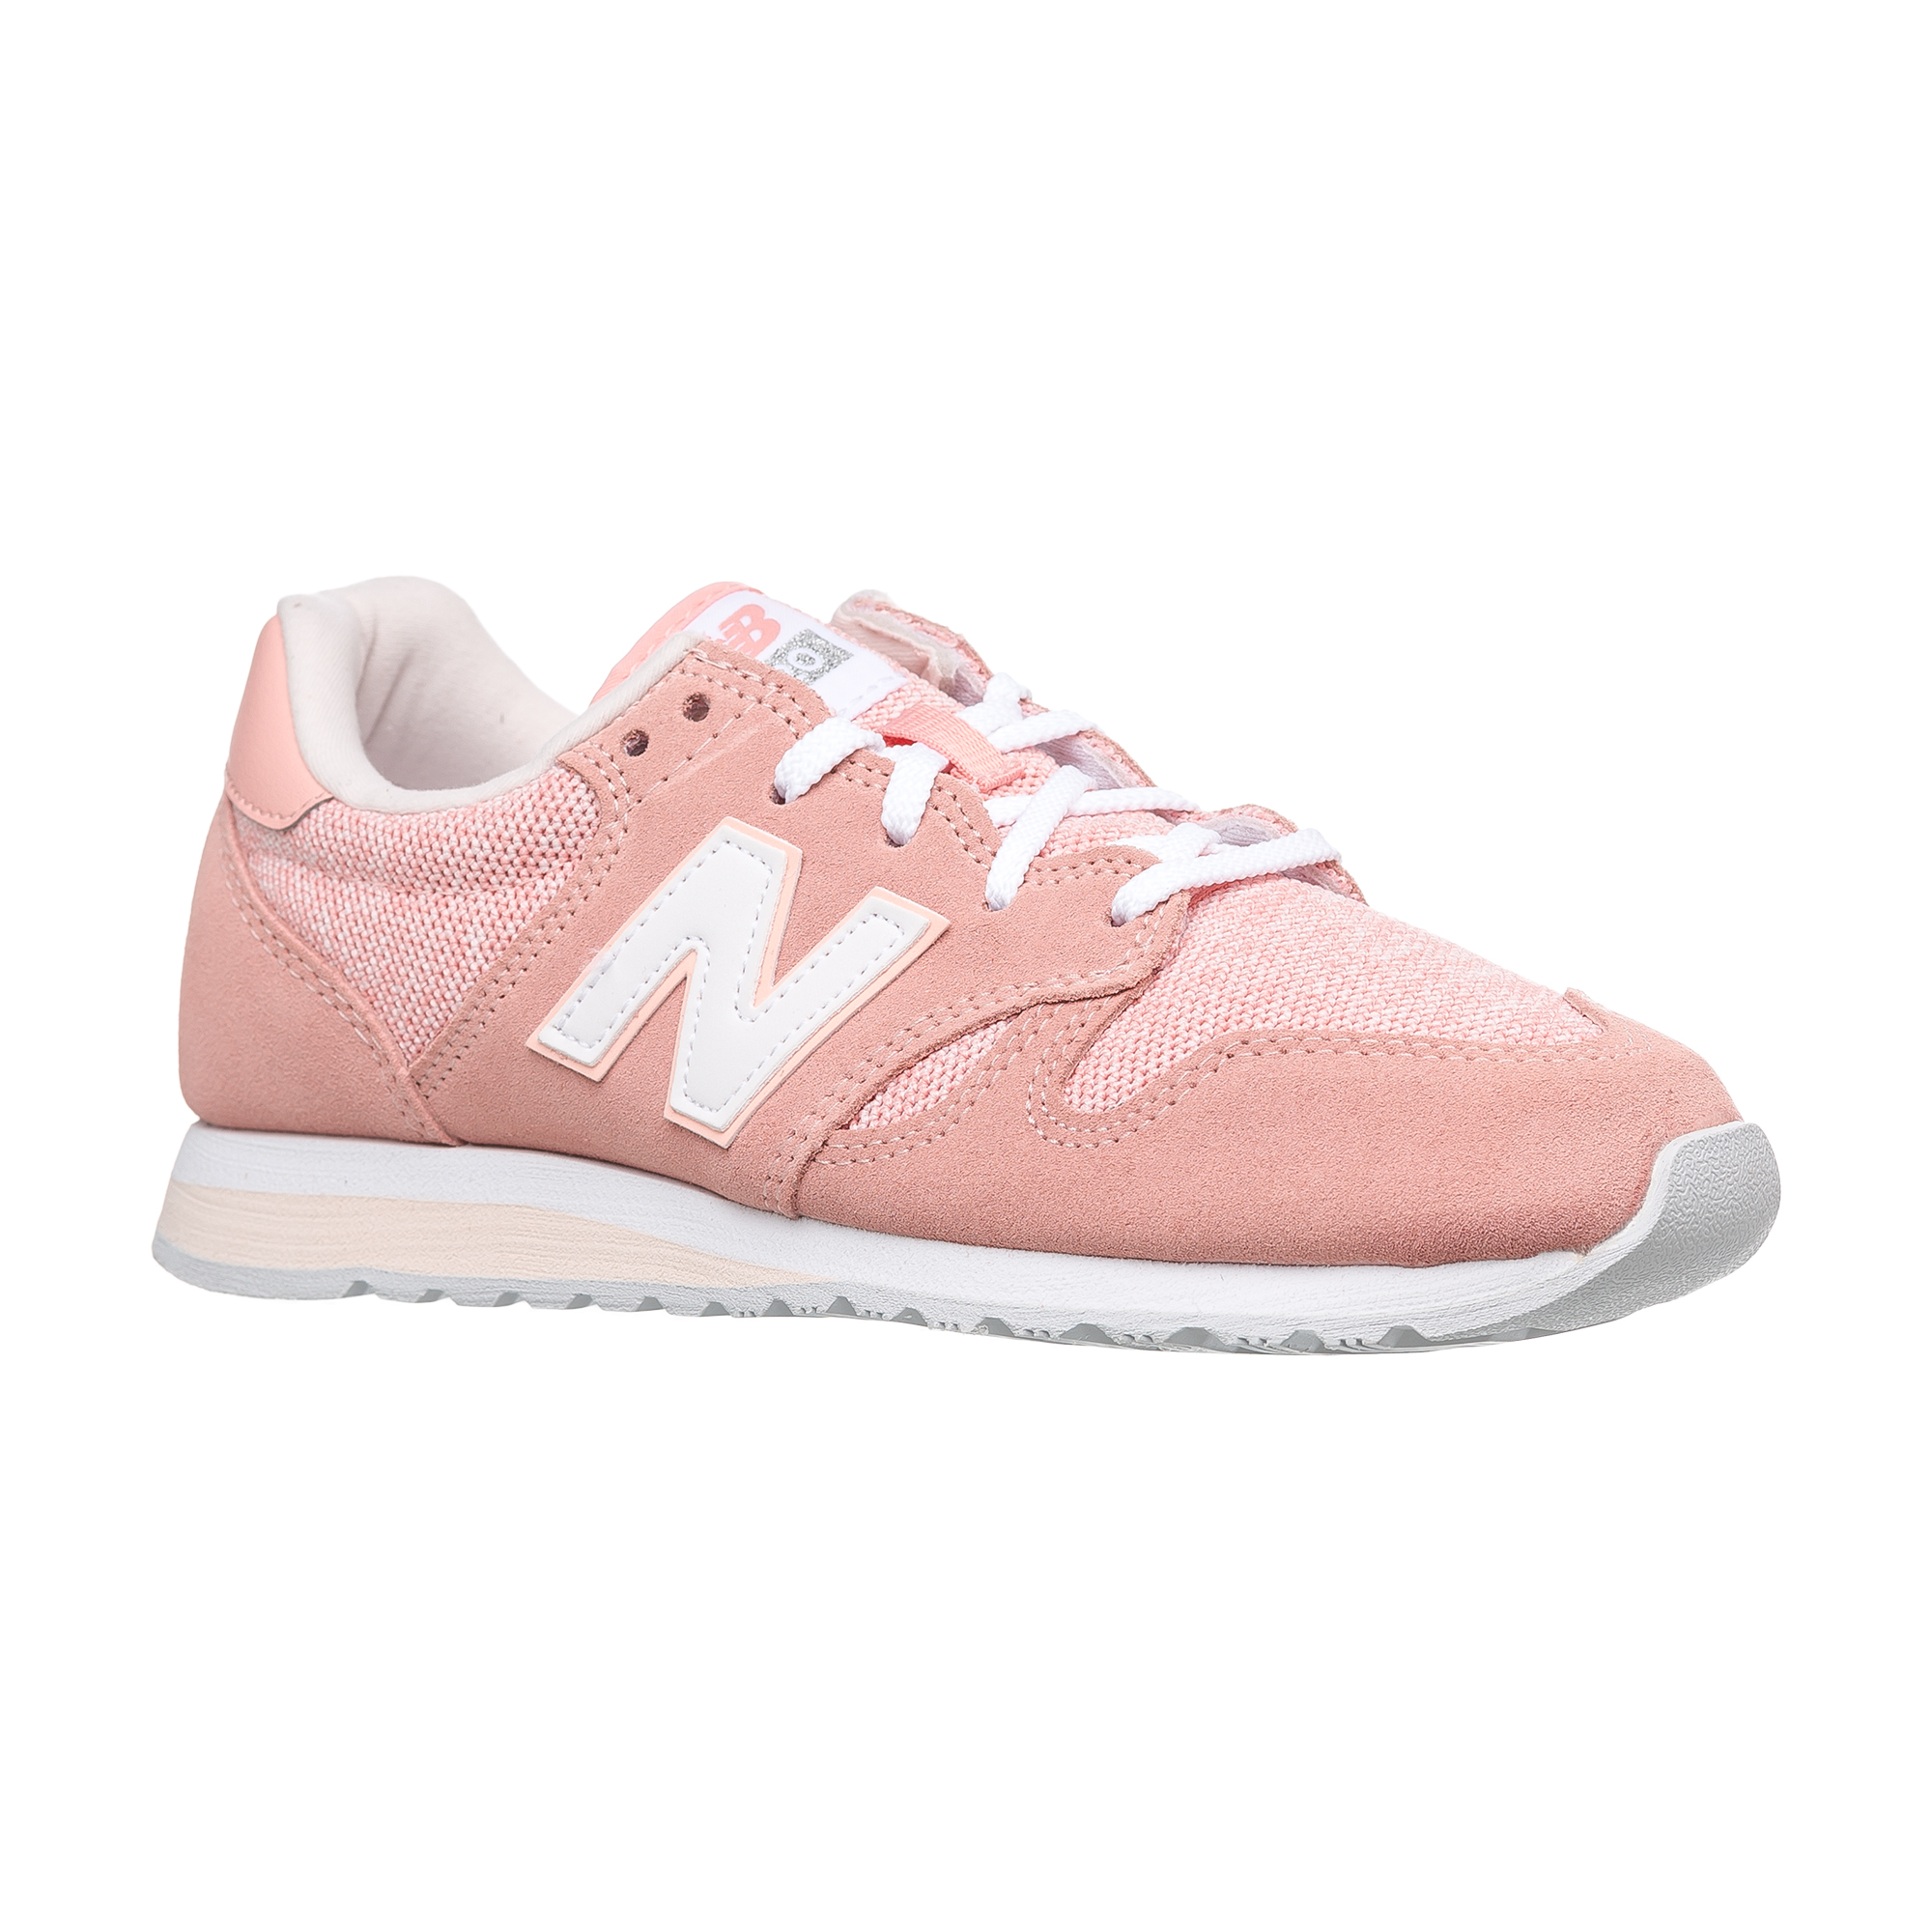 520 New Balance, размер 35, цвет розовый NBWL520 - фото 1